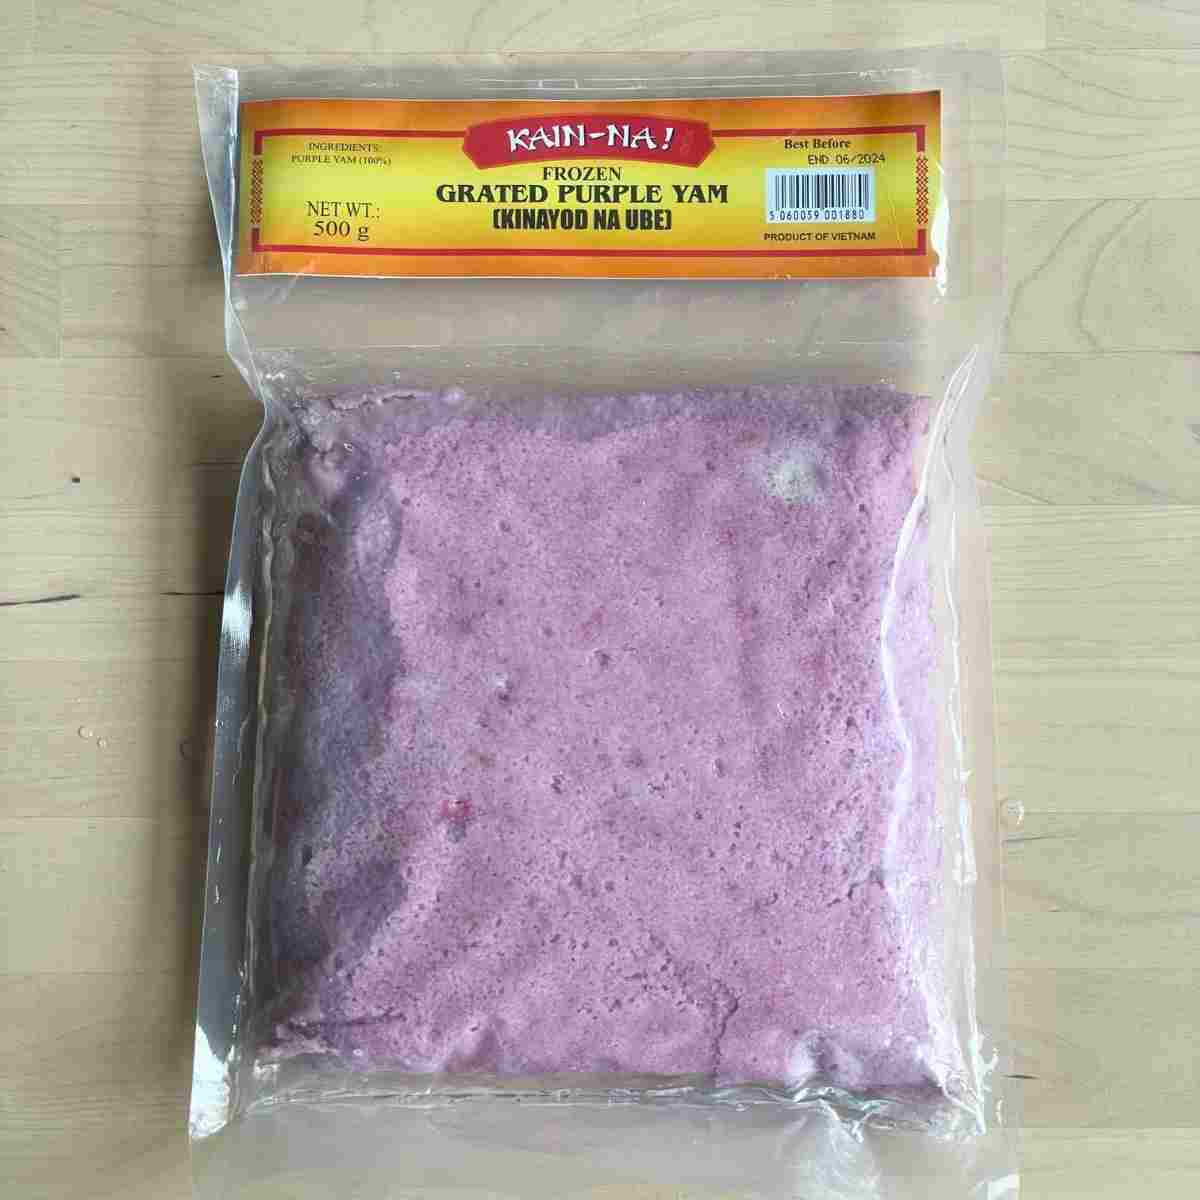 Frozen grated purple yam